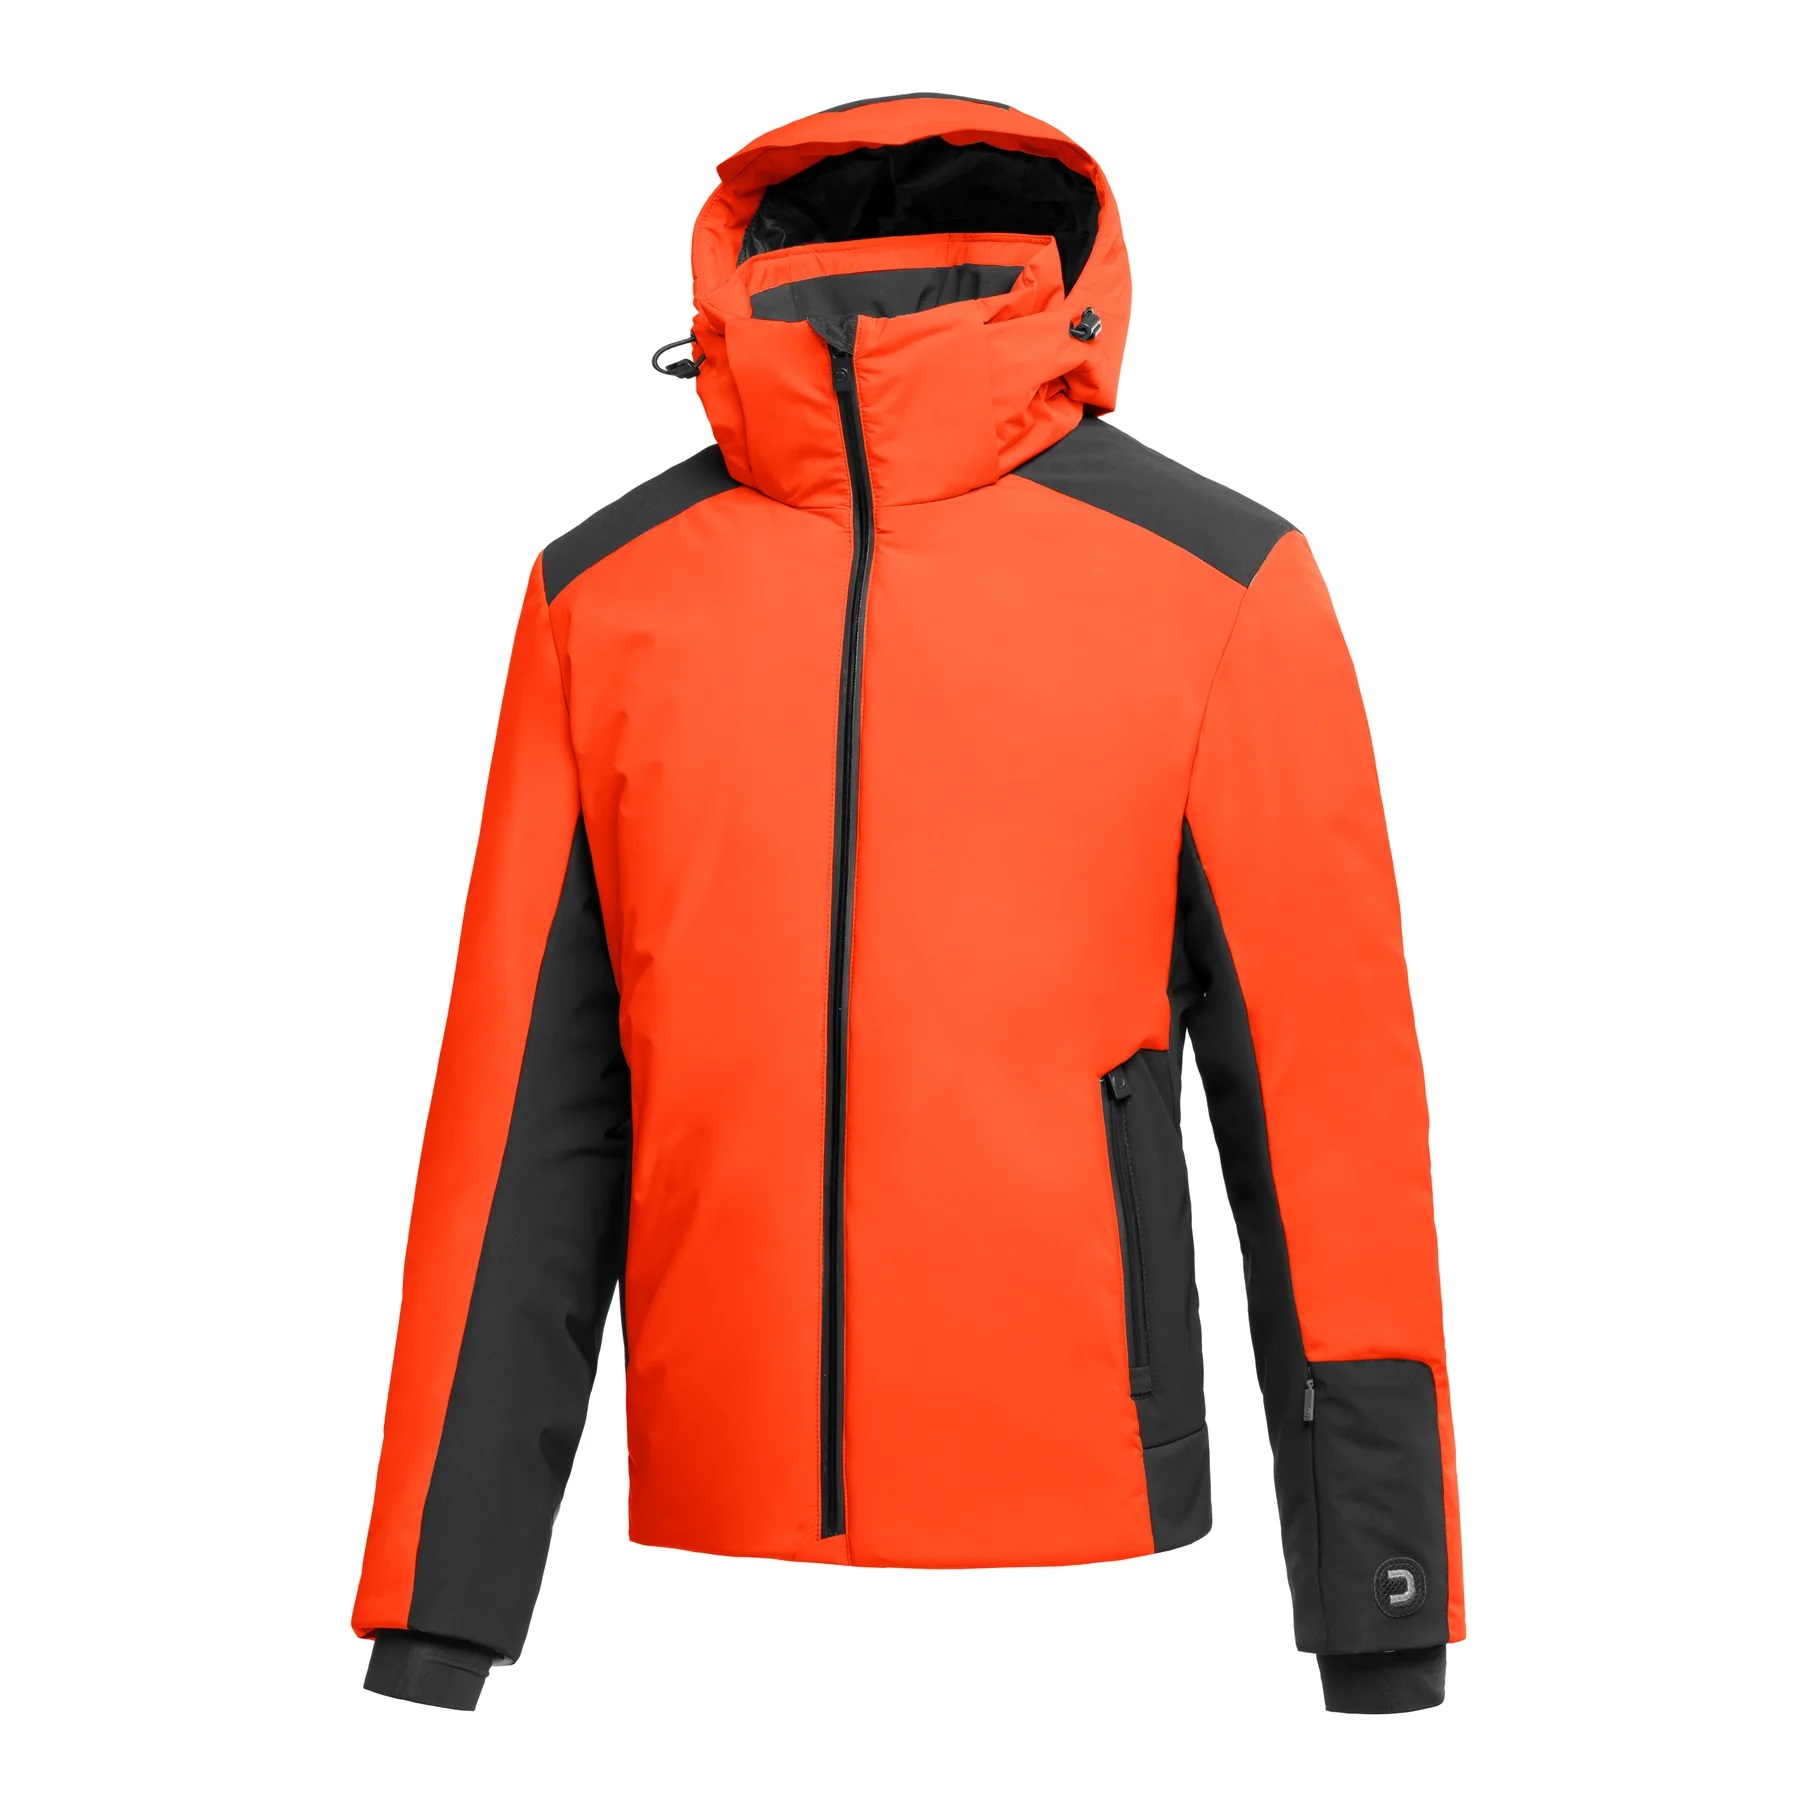  Ski & Snow Jackets -  dotout Dual Jacket